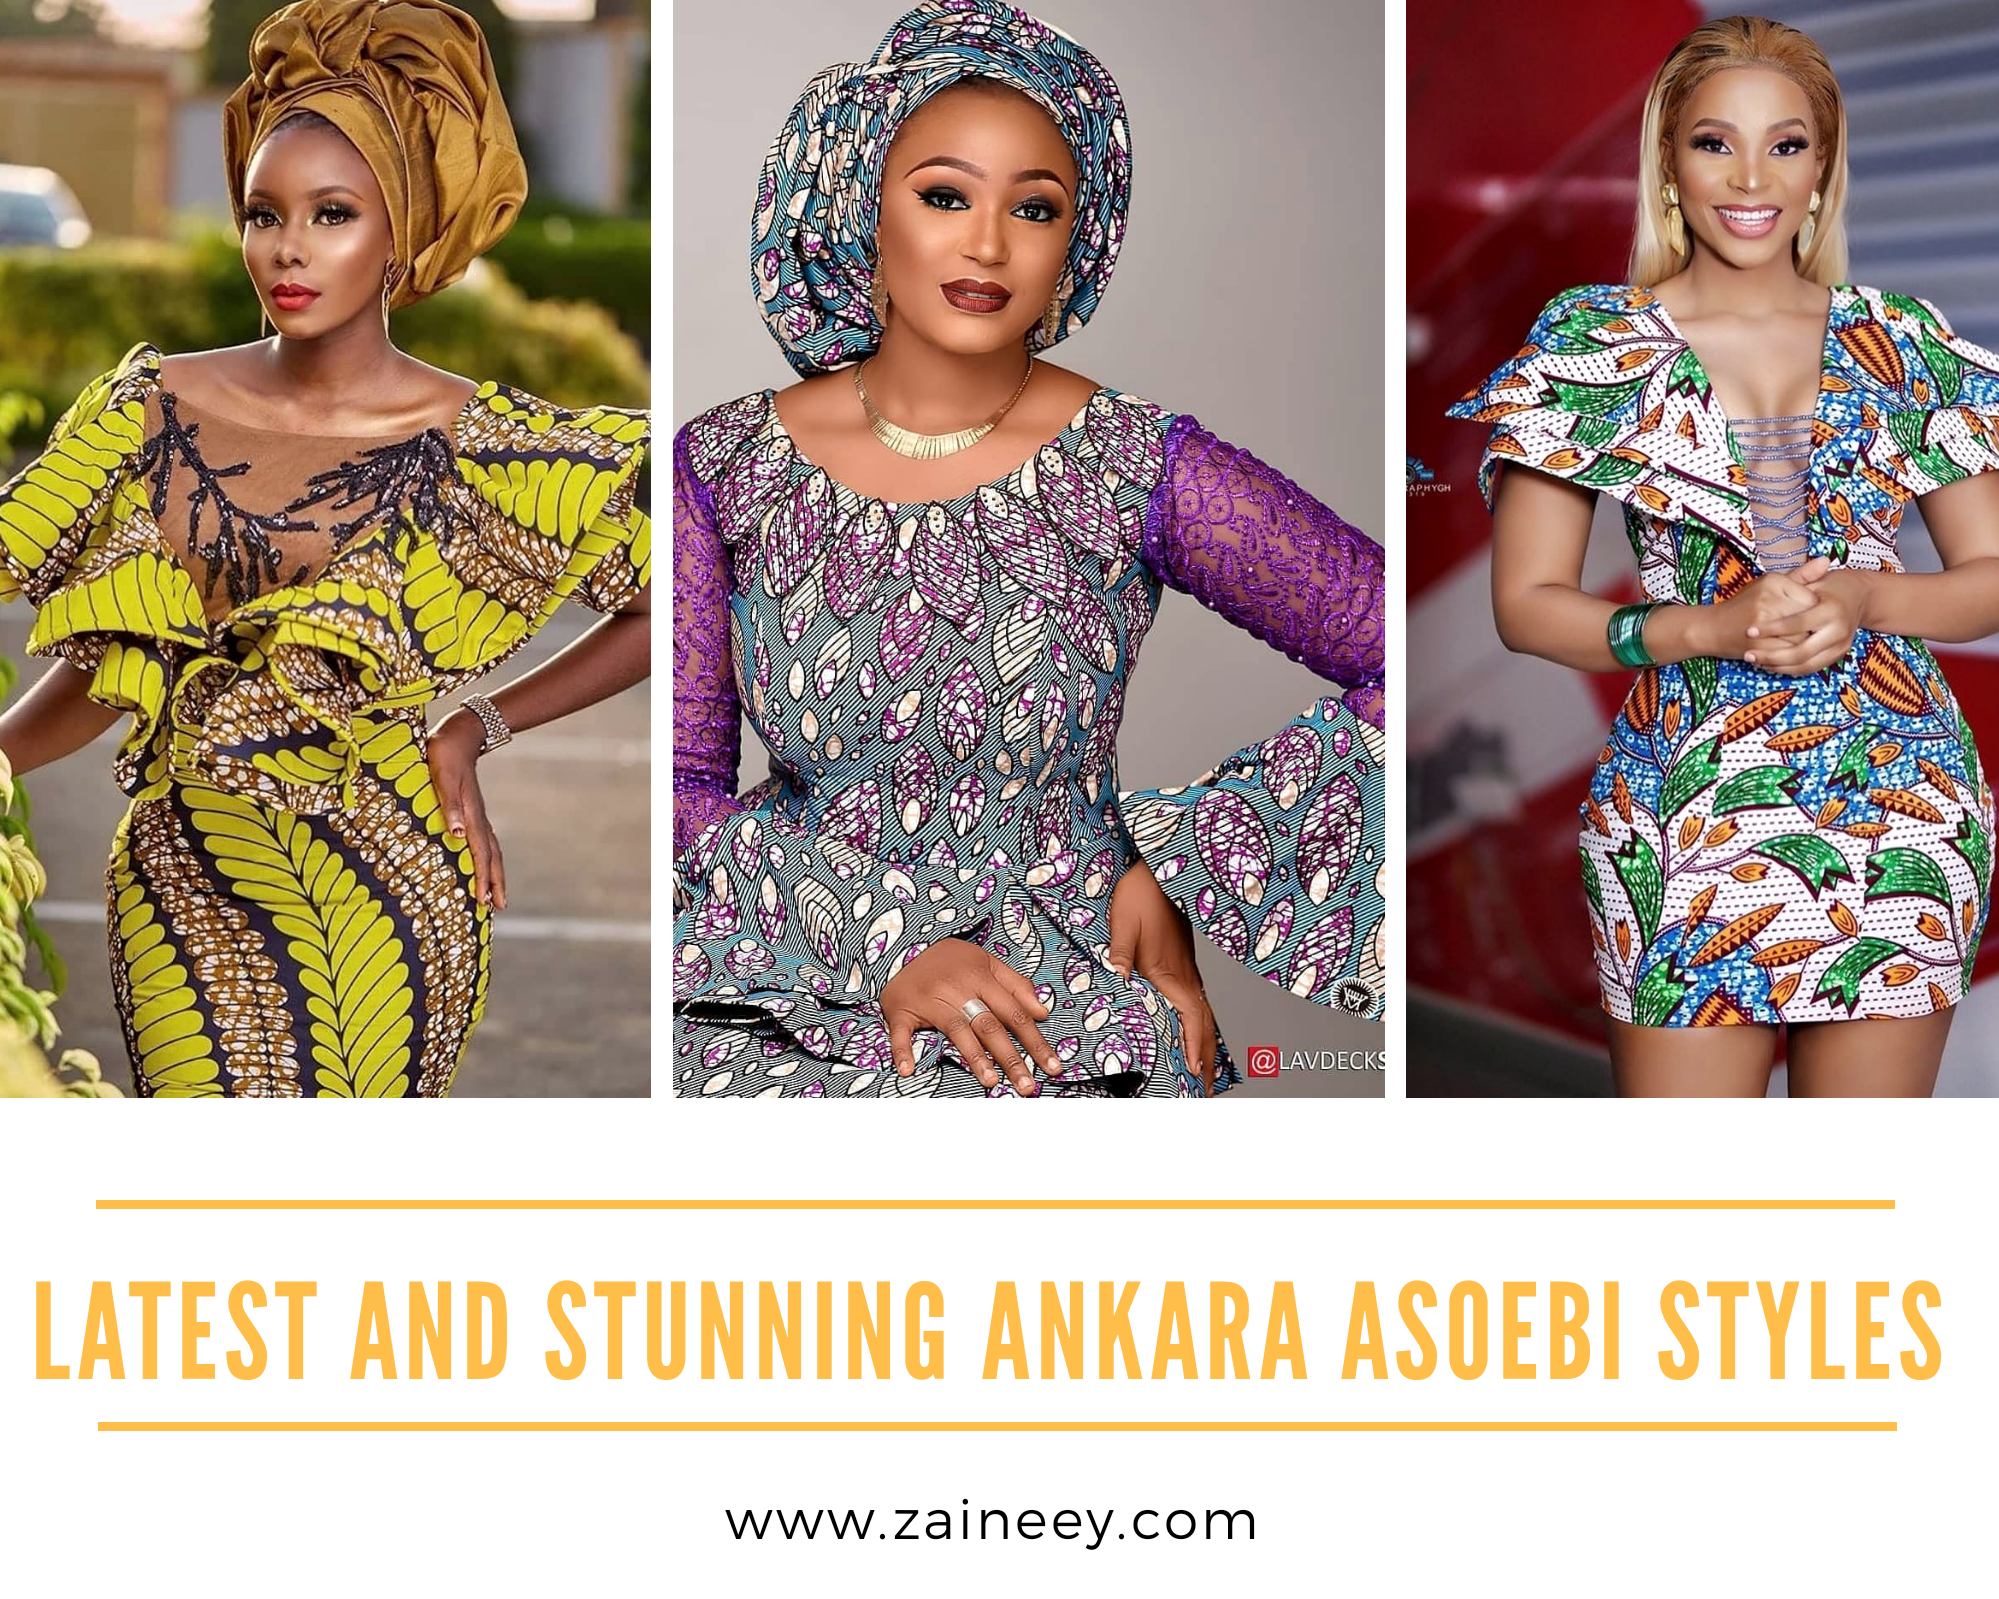 African Asoebi Styles 2020: Latest and Stunning Ankara Asoebi Styles for Ladies